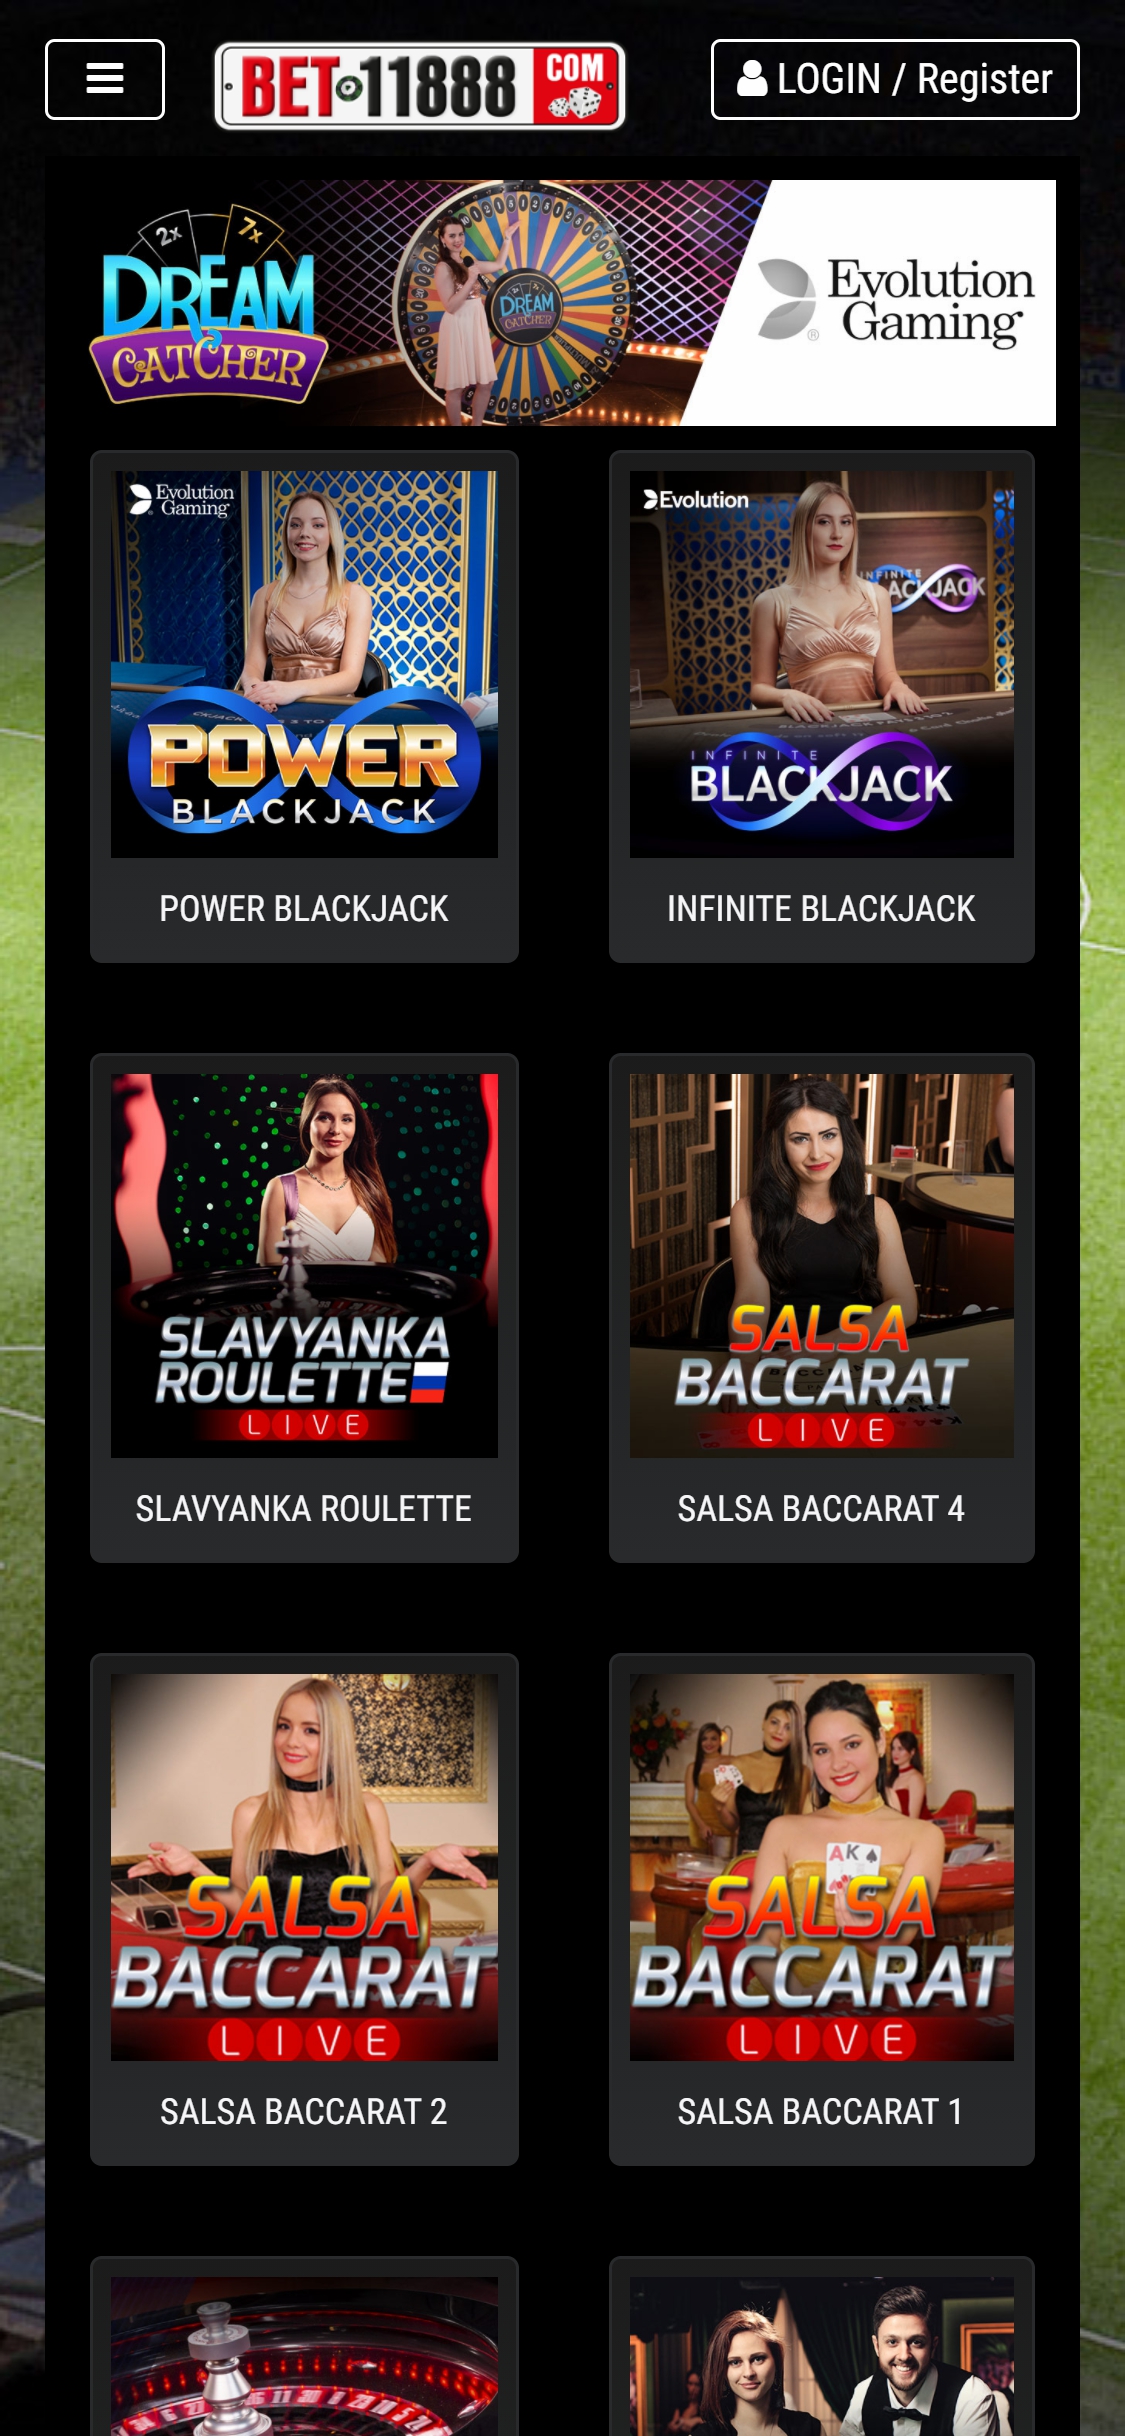 Bet11888 Casino Mobile Live Dealer Games Review